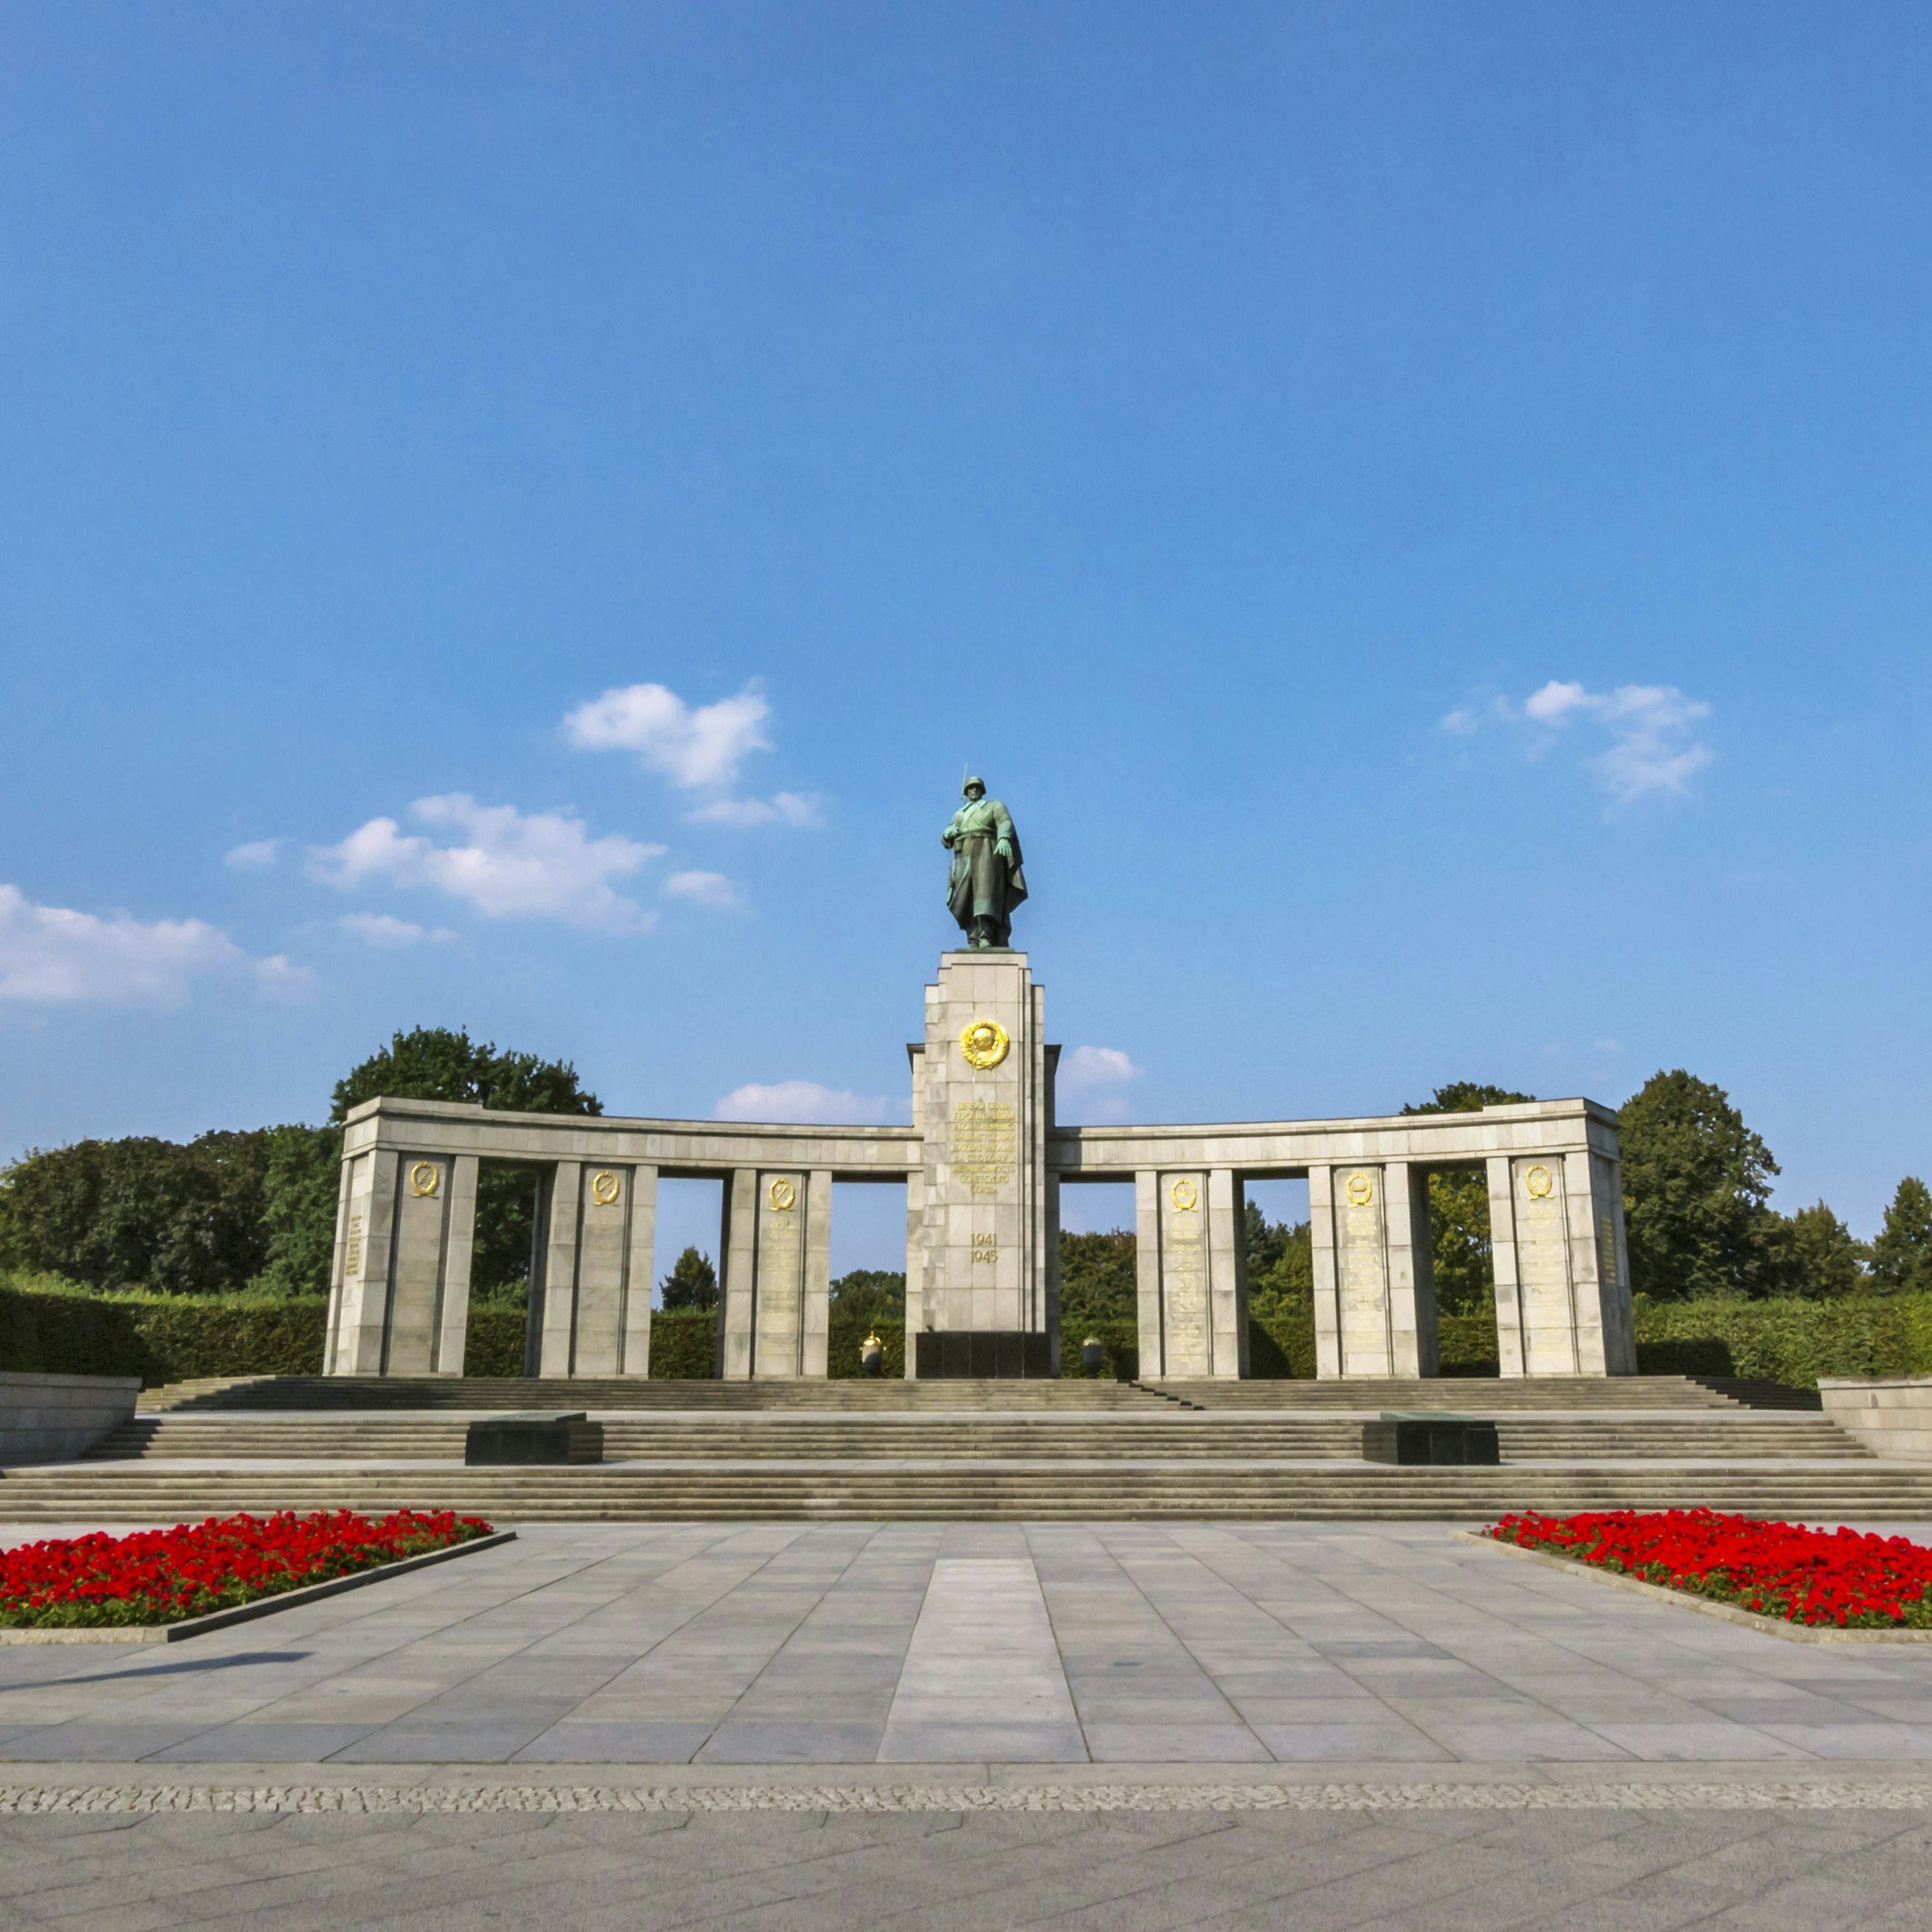 Sowjetisches Ehrenmal Tiergarten, Monument